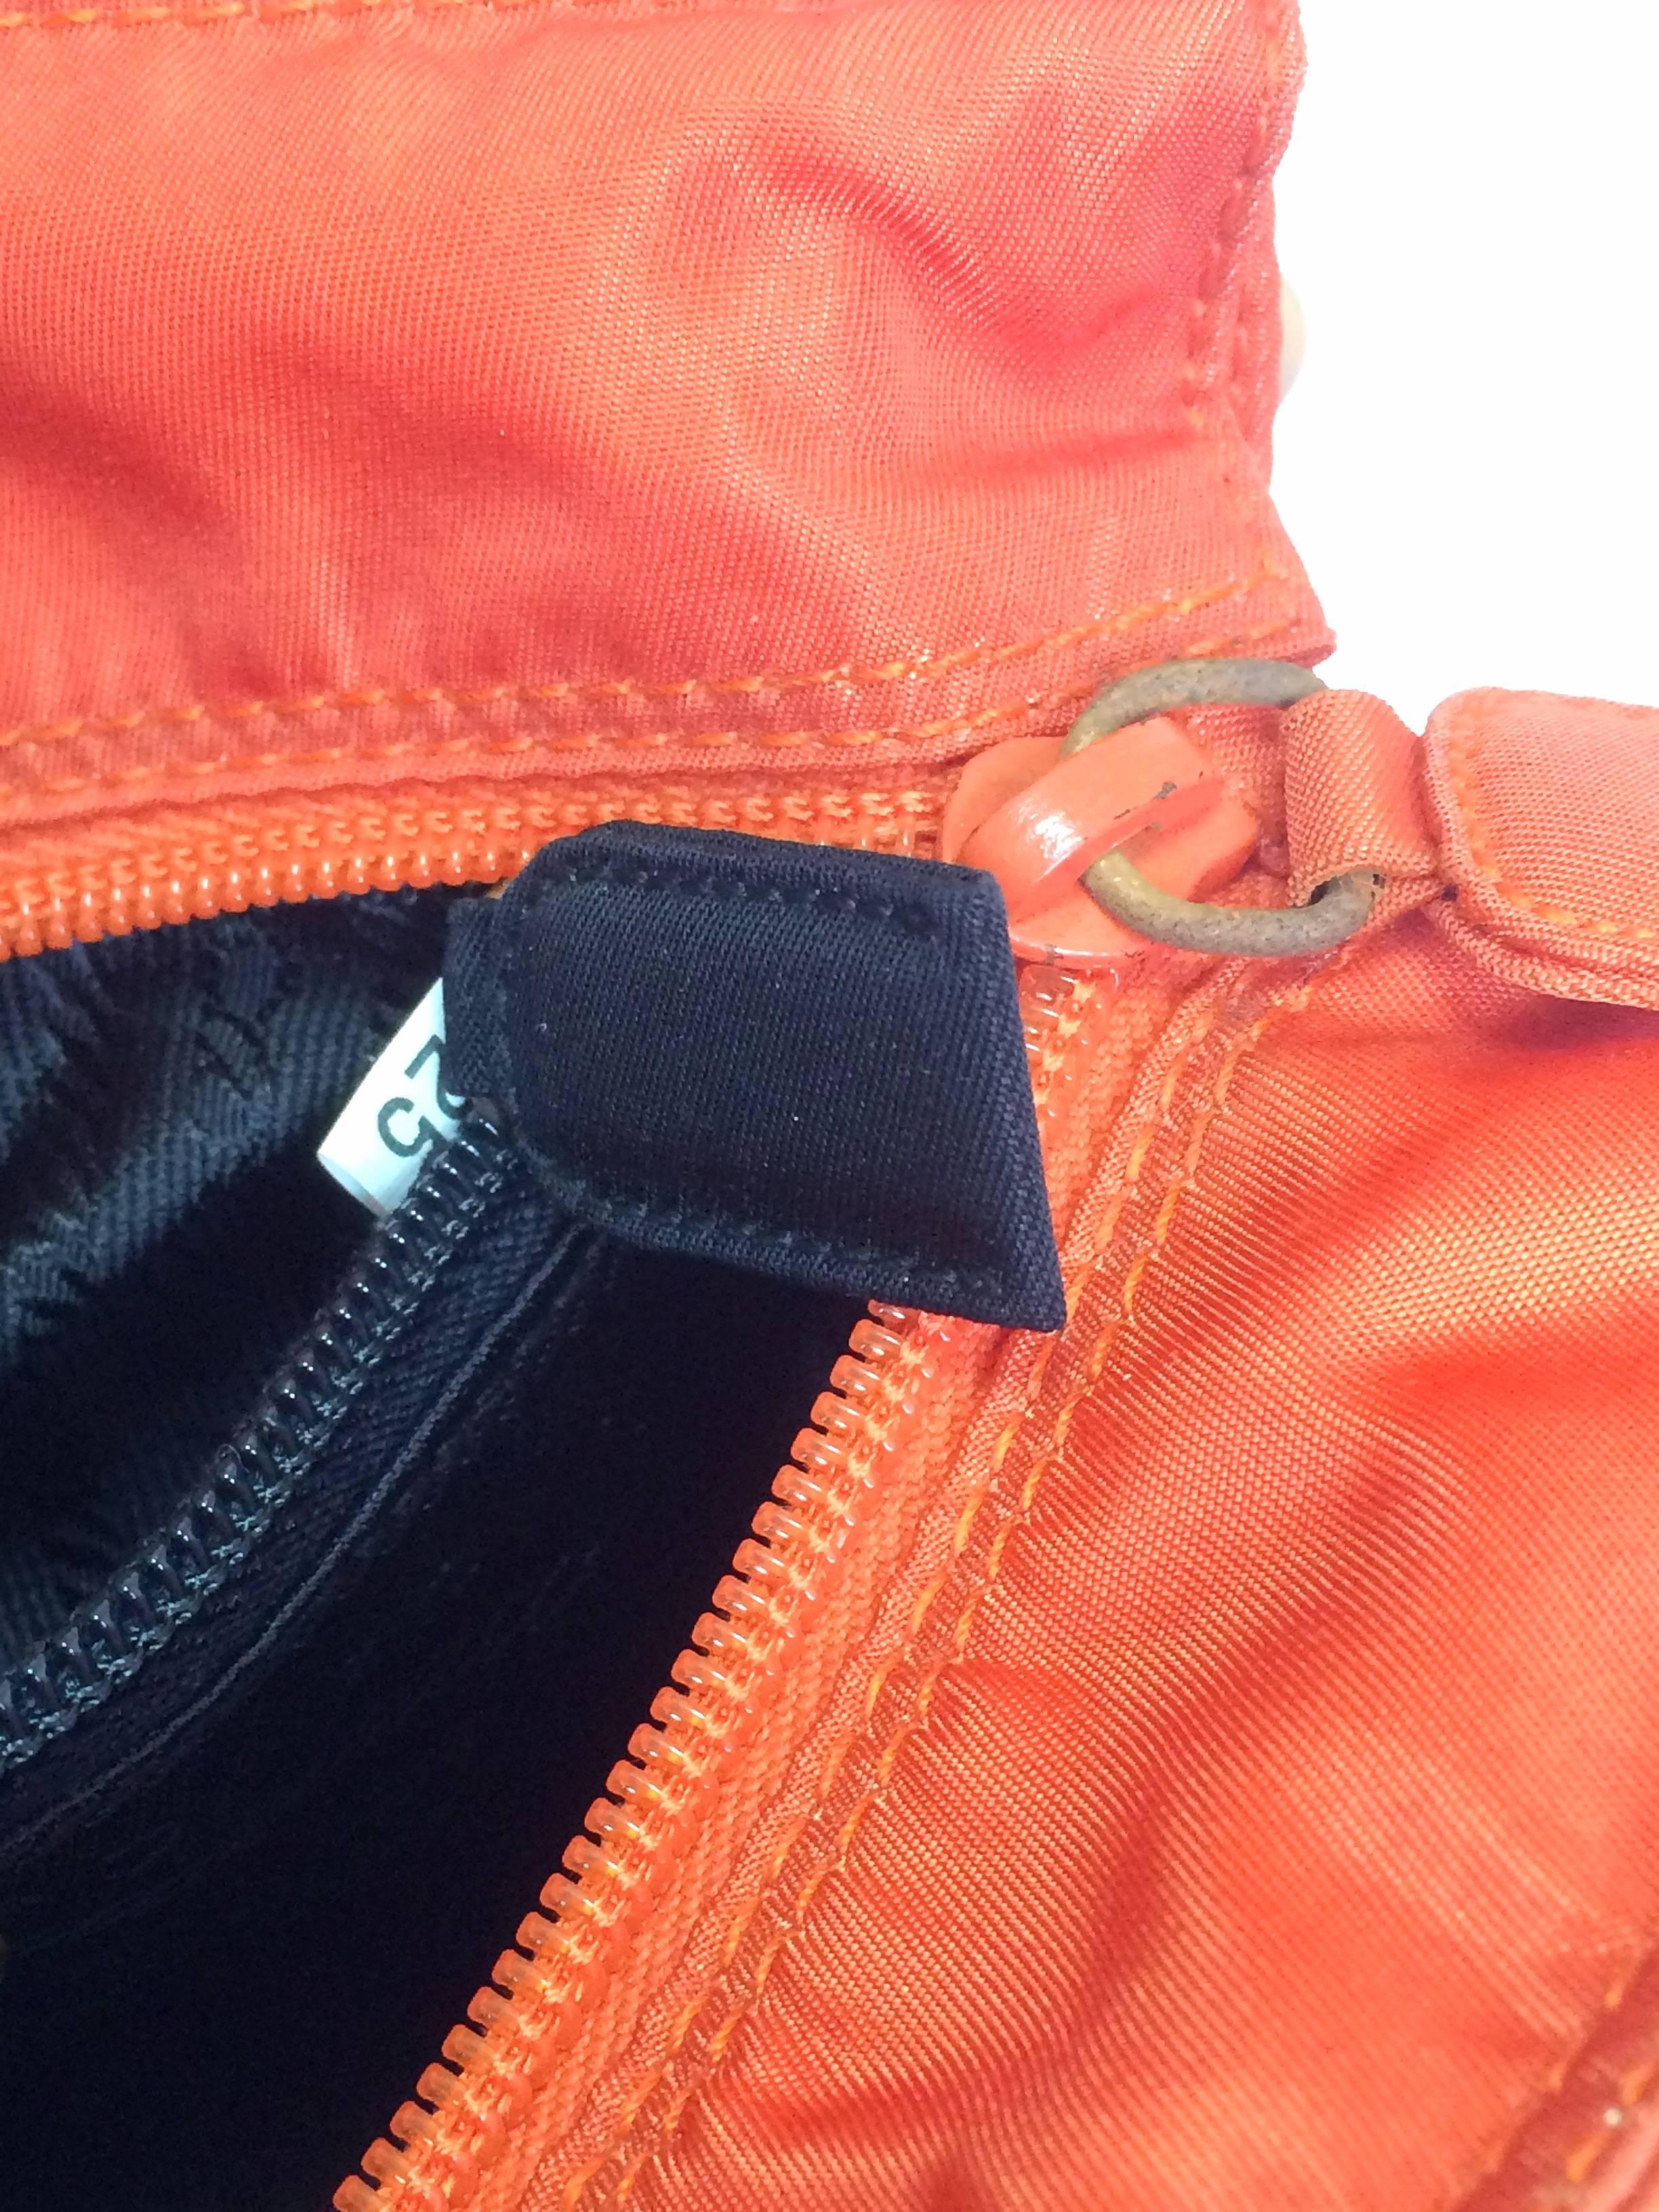 Women's Vintage PRADA orange nylon mini tote bag with golden chain and metallic handles.